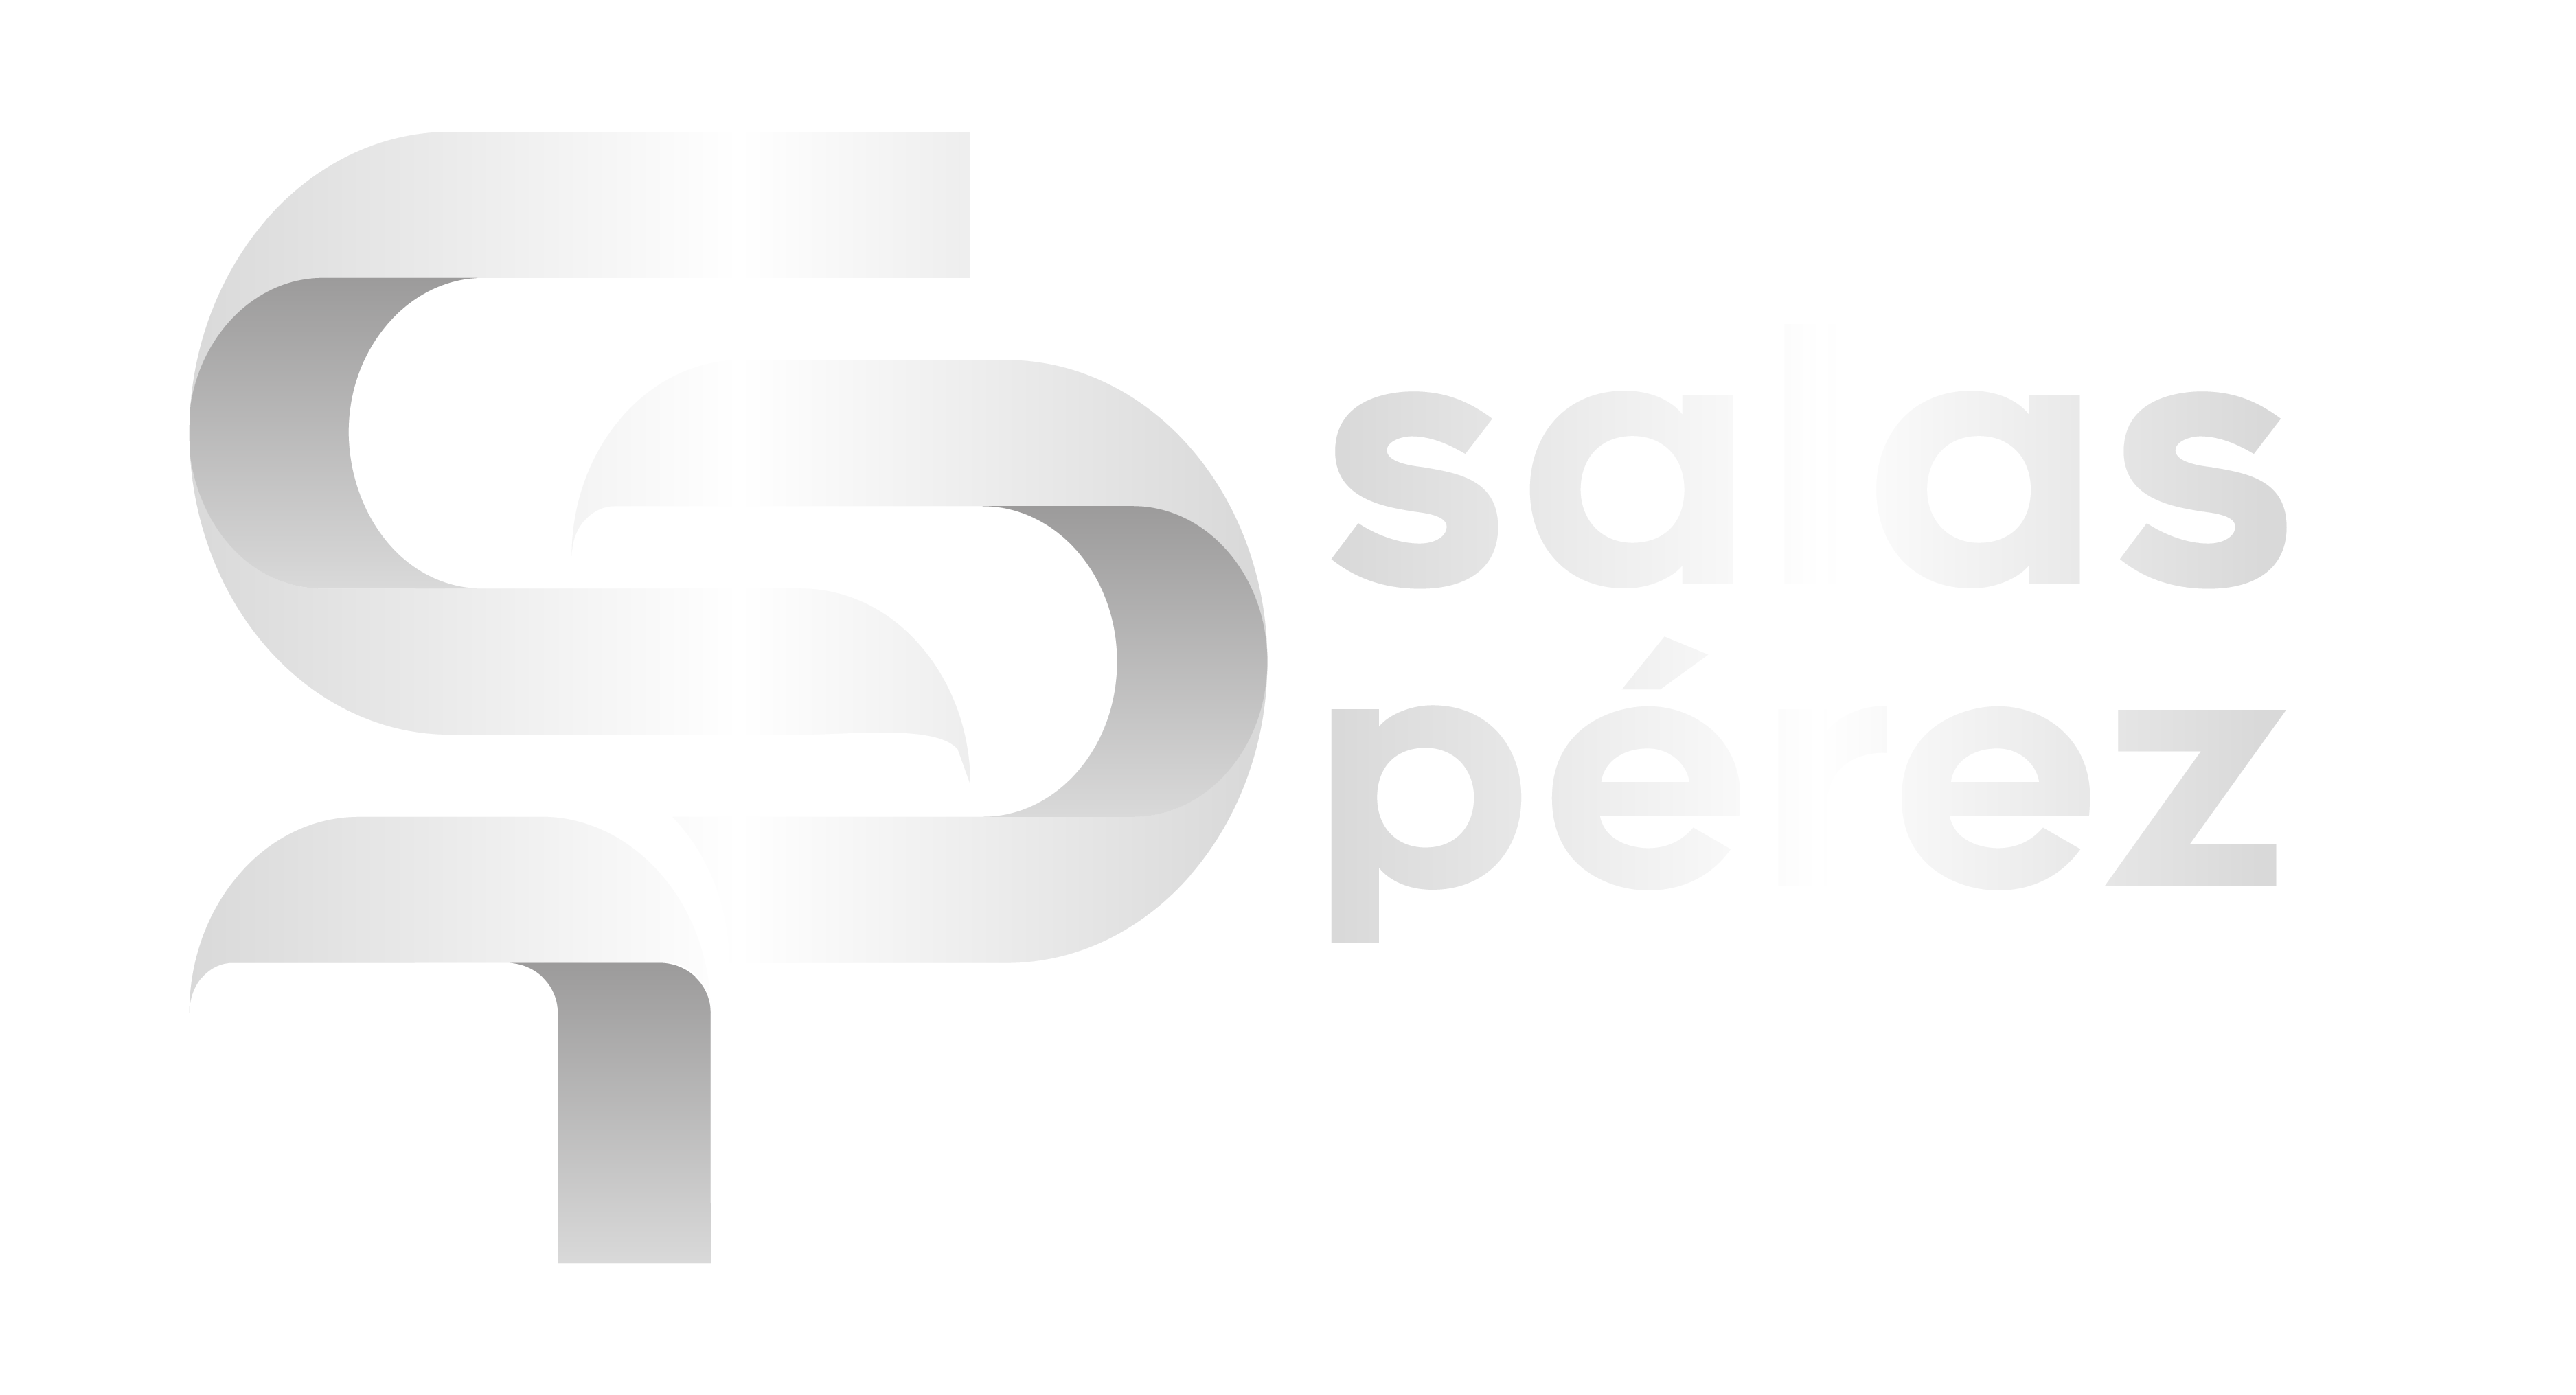 Salas Pérez